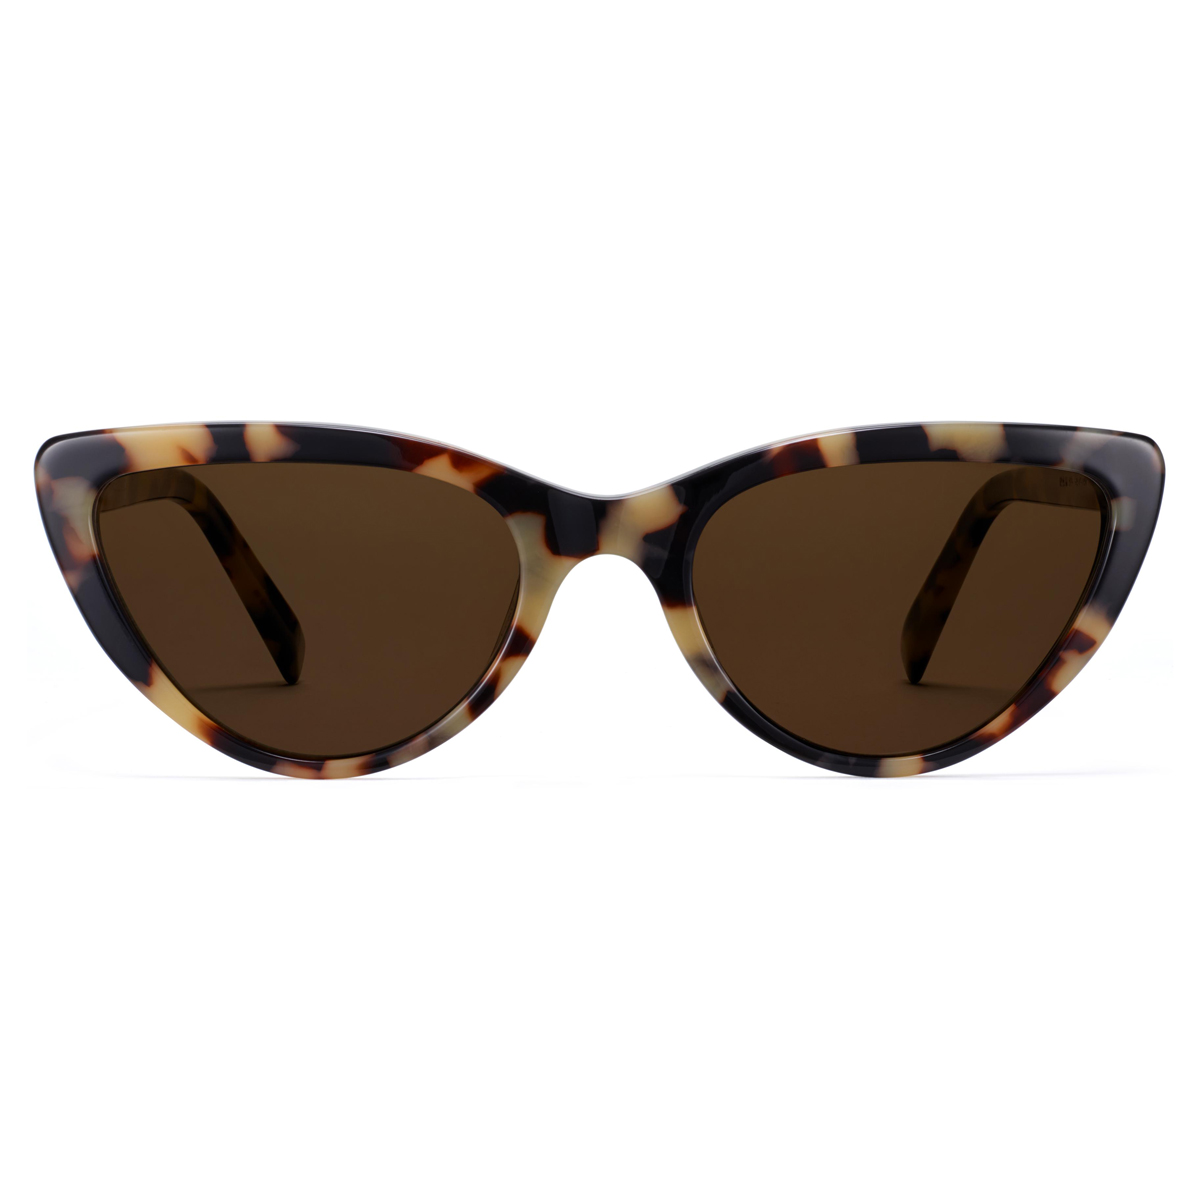 Shop The Top 5 Summer 2020 Sunglasses Trends - Coveteur